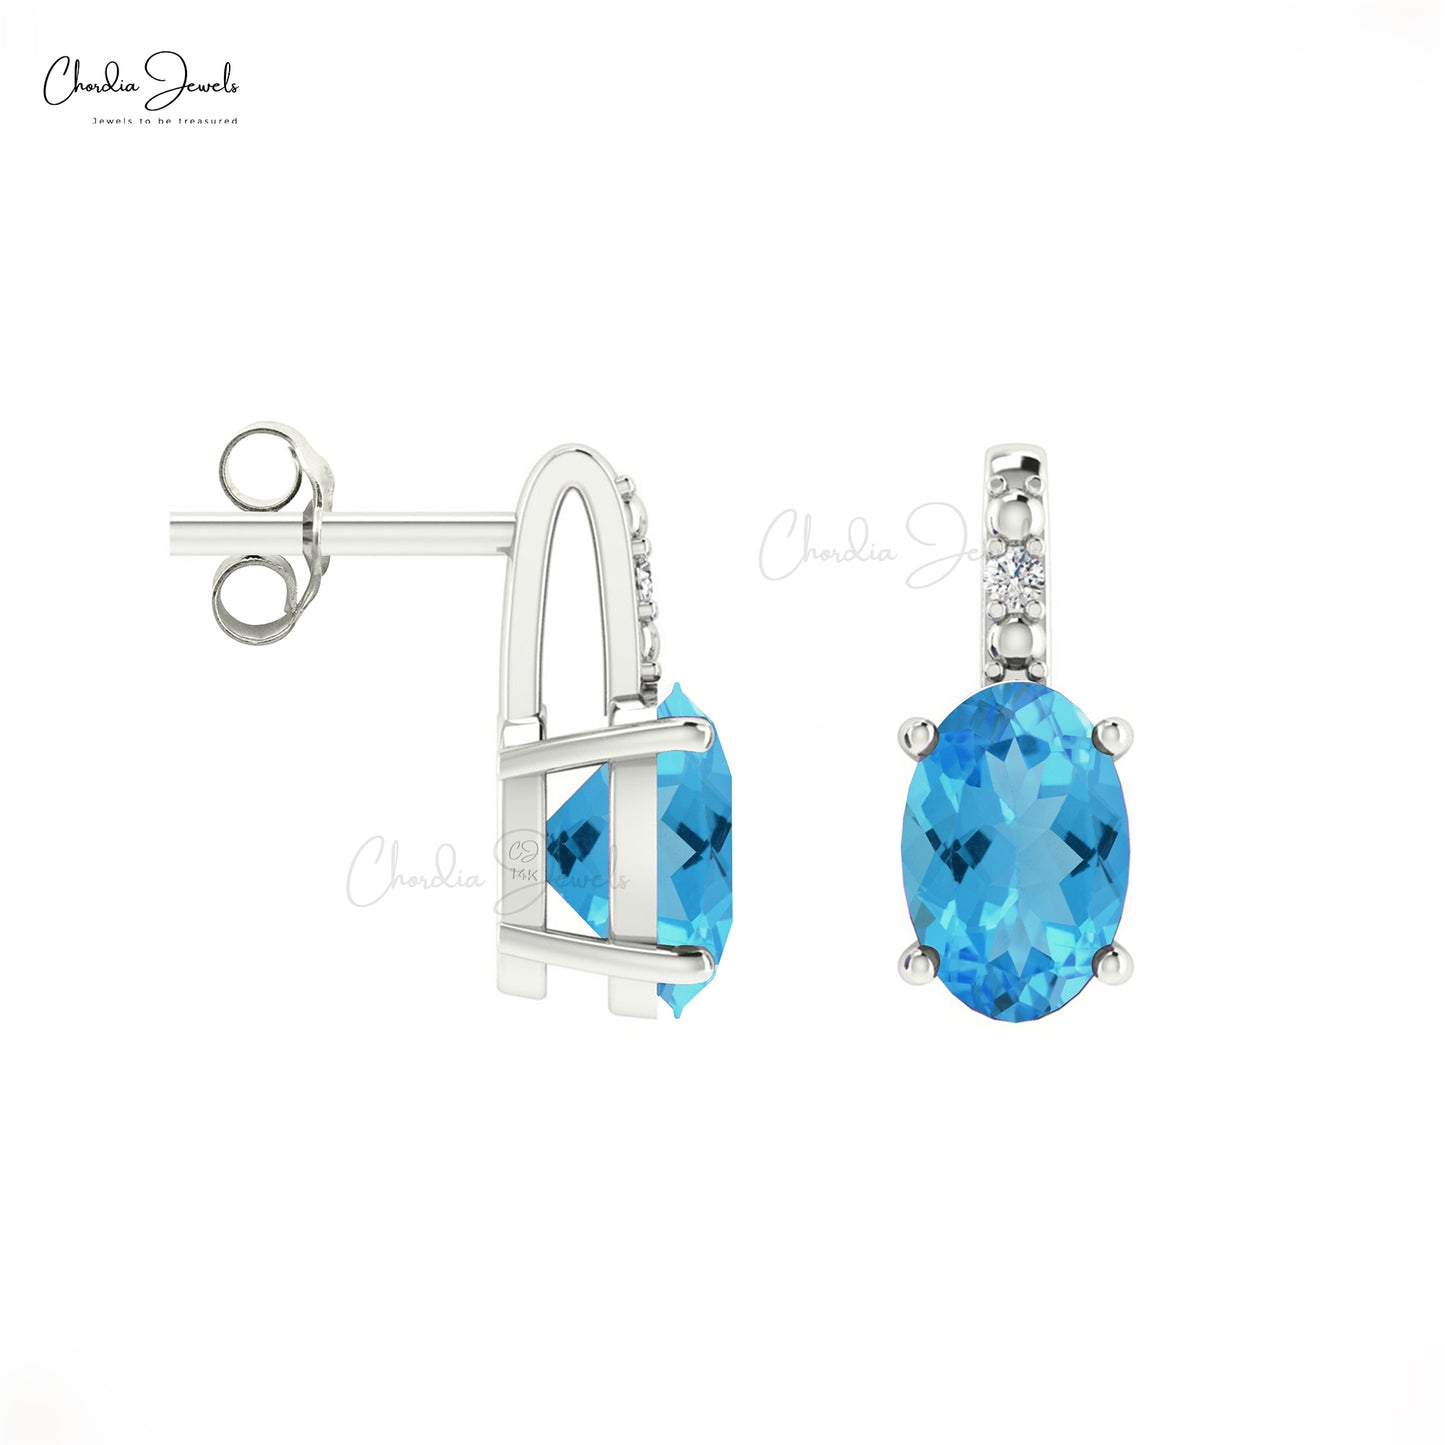 Oval Swiss Blue Topaz Gemstone Earrings in 14K Gold with Round Diamond